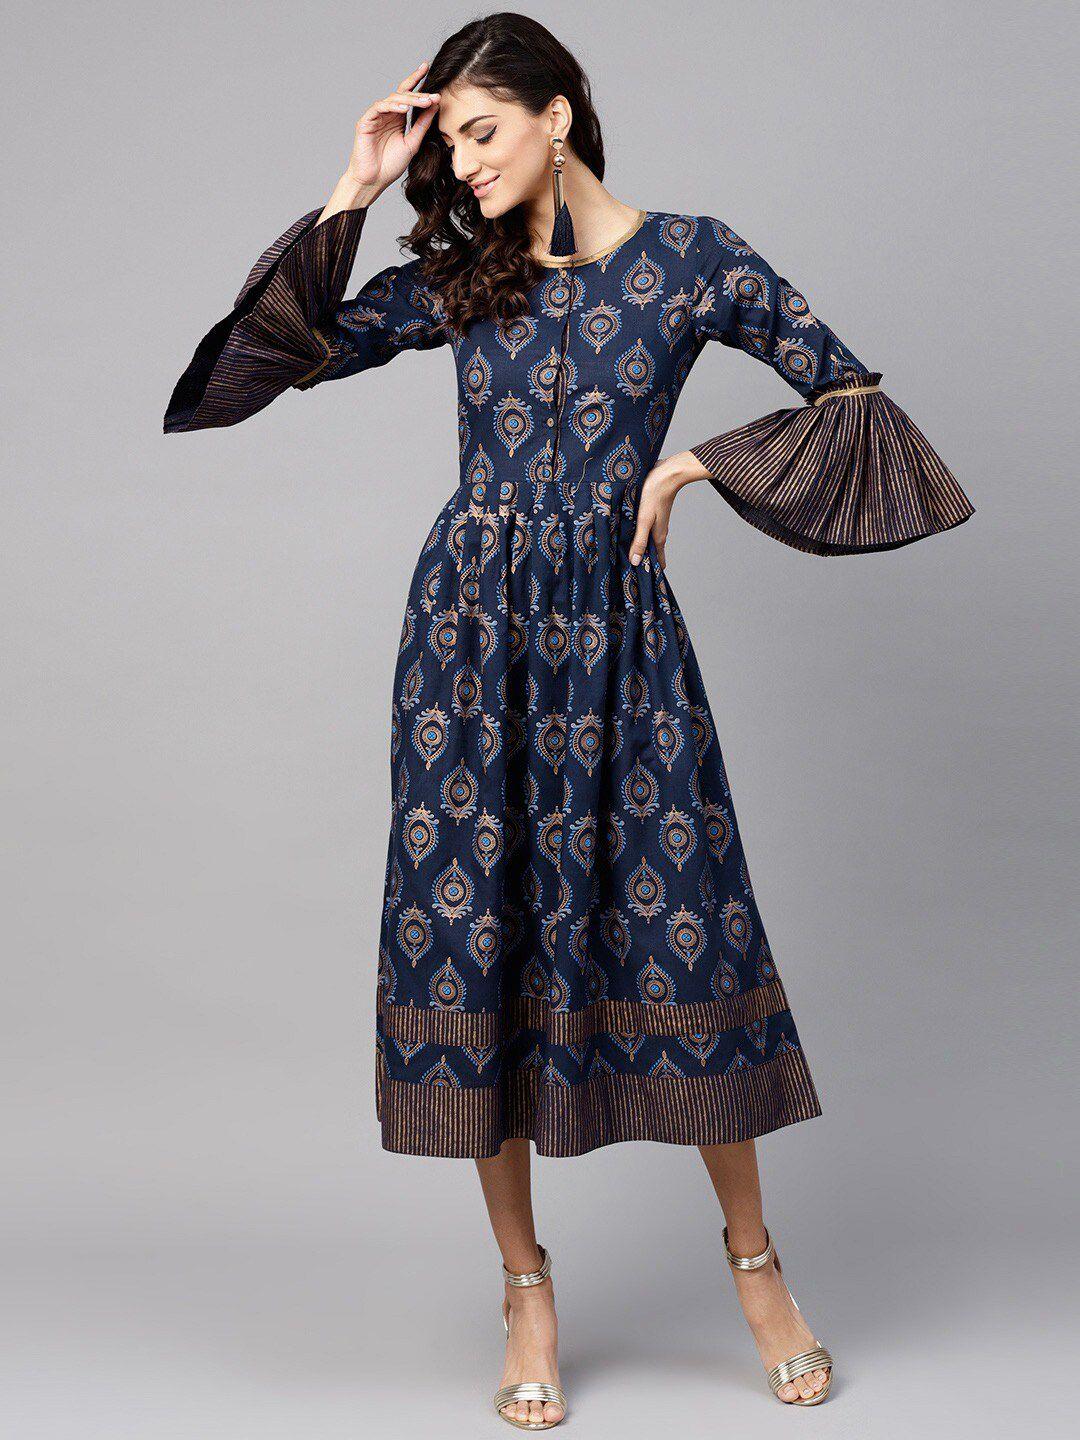 tulsattva-navy-blue-&-golden-ethnic-motifs-printed-cotton-ethnic-fit-&-flare-midi-dress